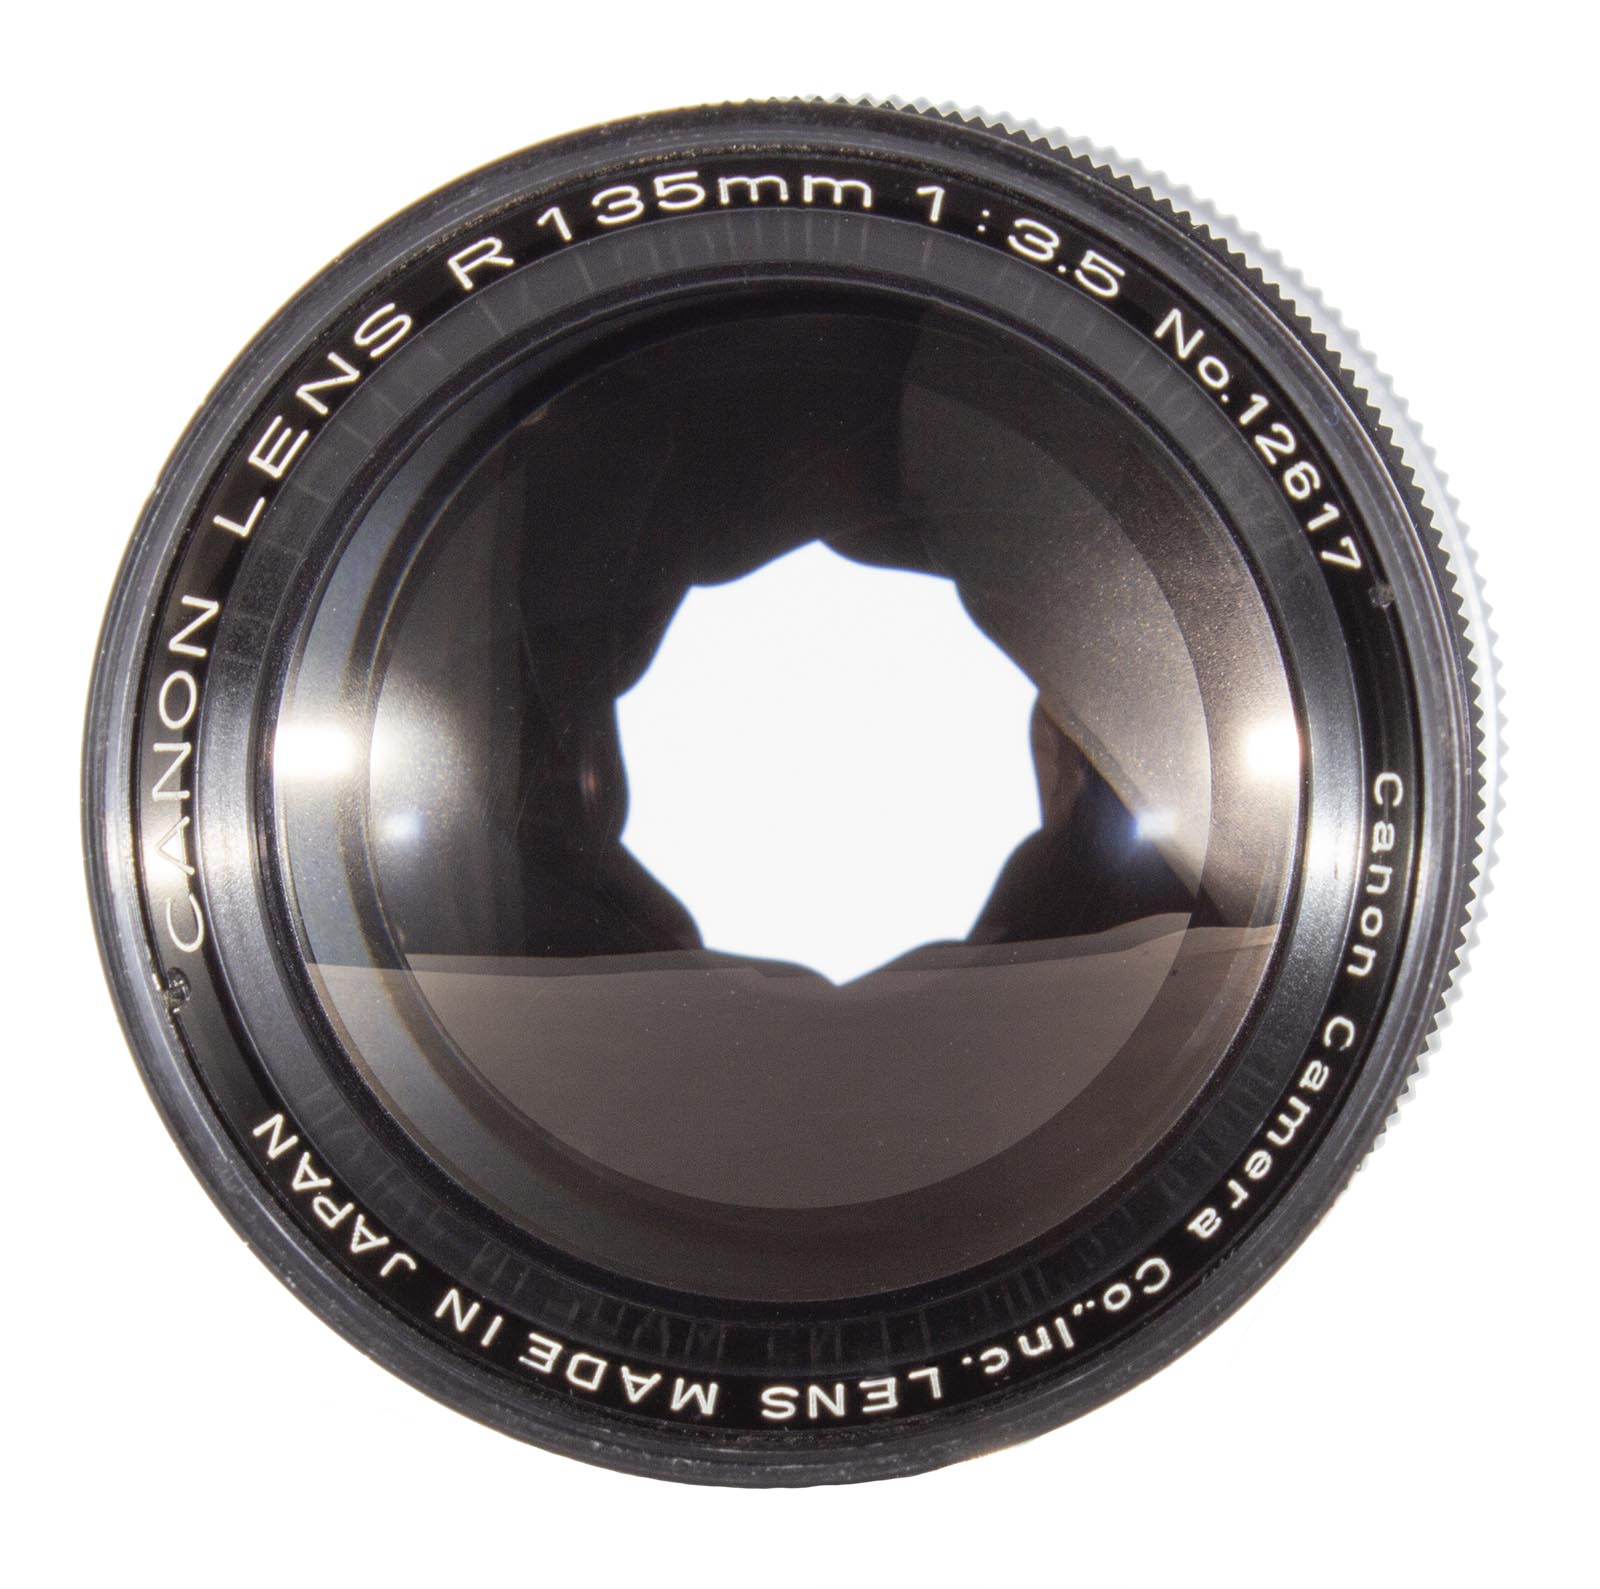 Canon R 135mm f/3.5 I Lens